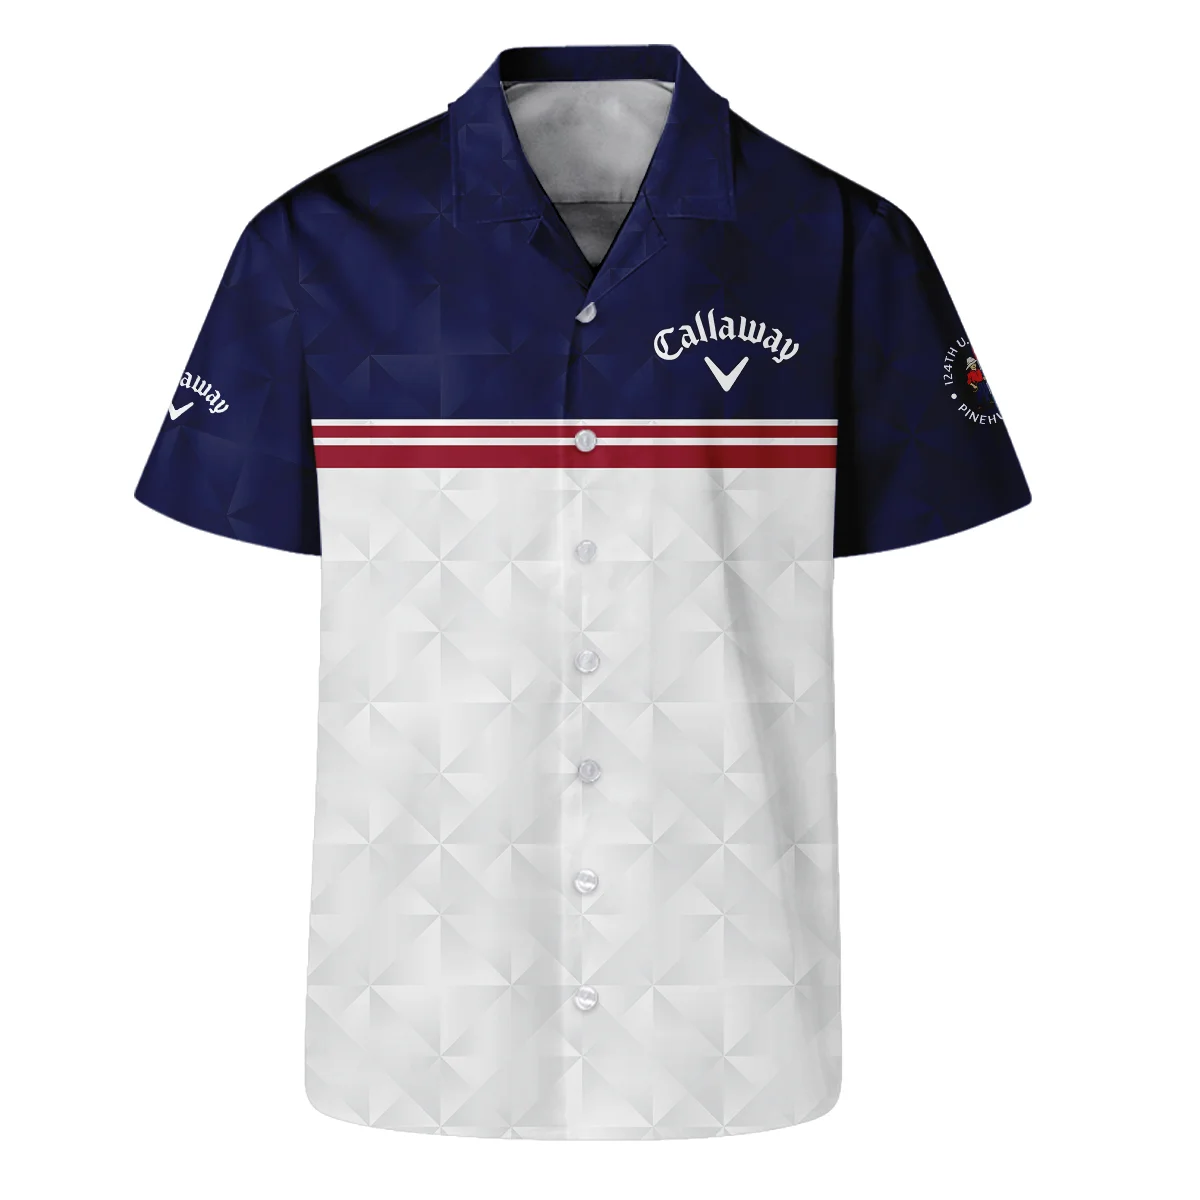 Golf Sport 124th U.S. Open Pinehurst Callaway Sleeveless Jacket Dark Blue White Abstract Geometric Triangles All Over Print Sleeveless Jacket